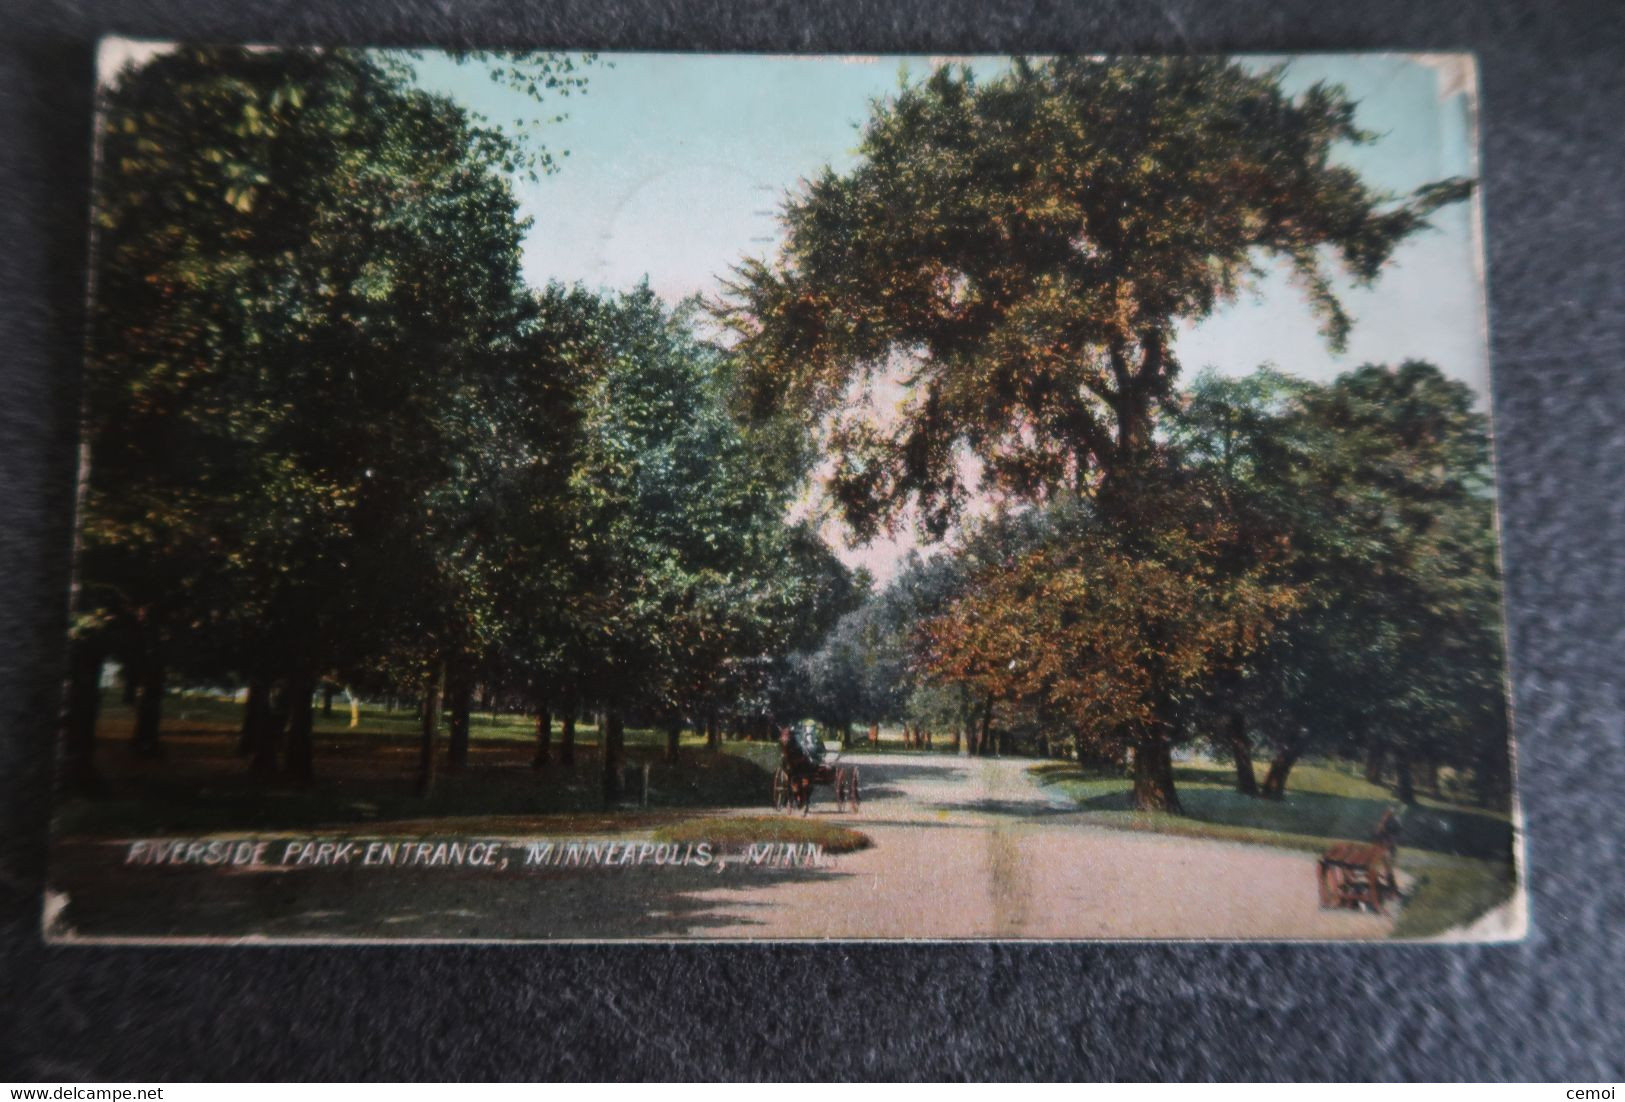 CPA - Riverside Park Entrance - MINNEAPOLIS - Minn - 1913 - Minneapolis